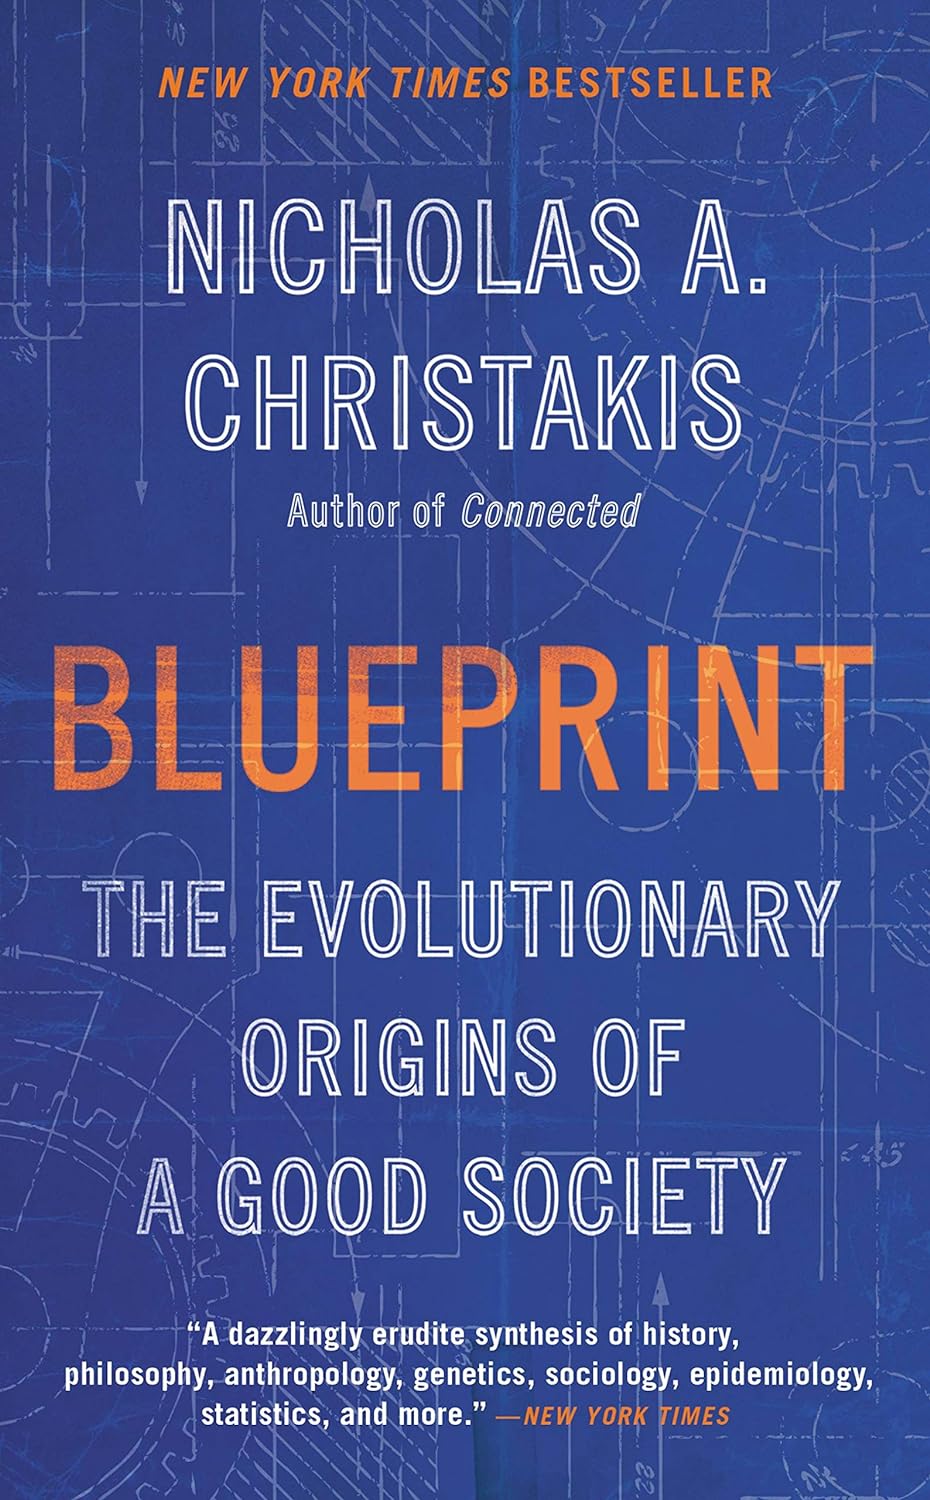 Blueprint, The Evolutionary Origins of a Good Society by Nicholas A. Christakis